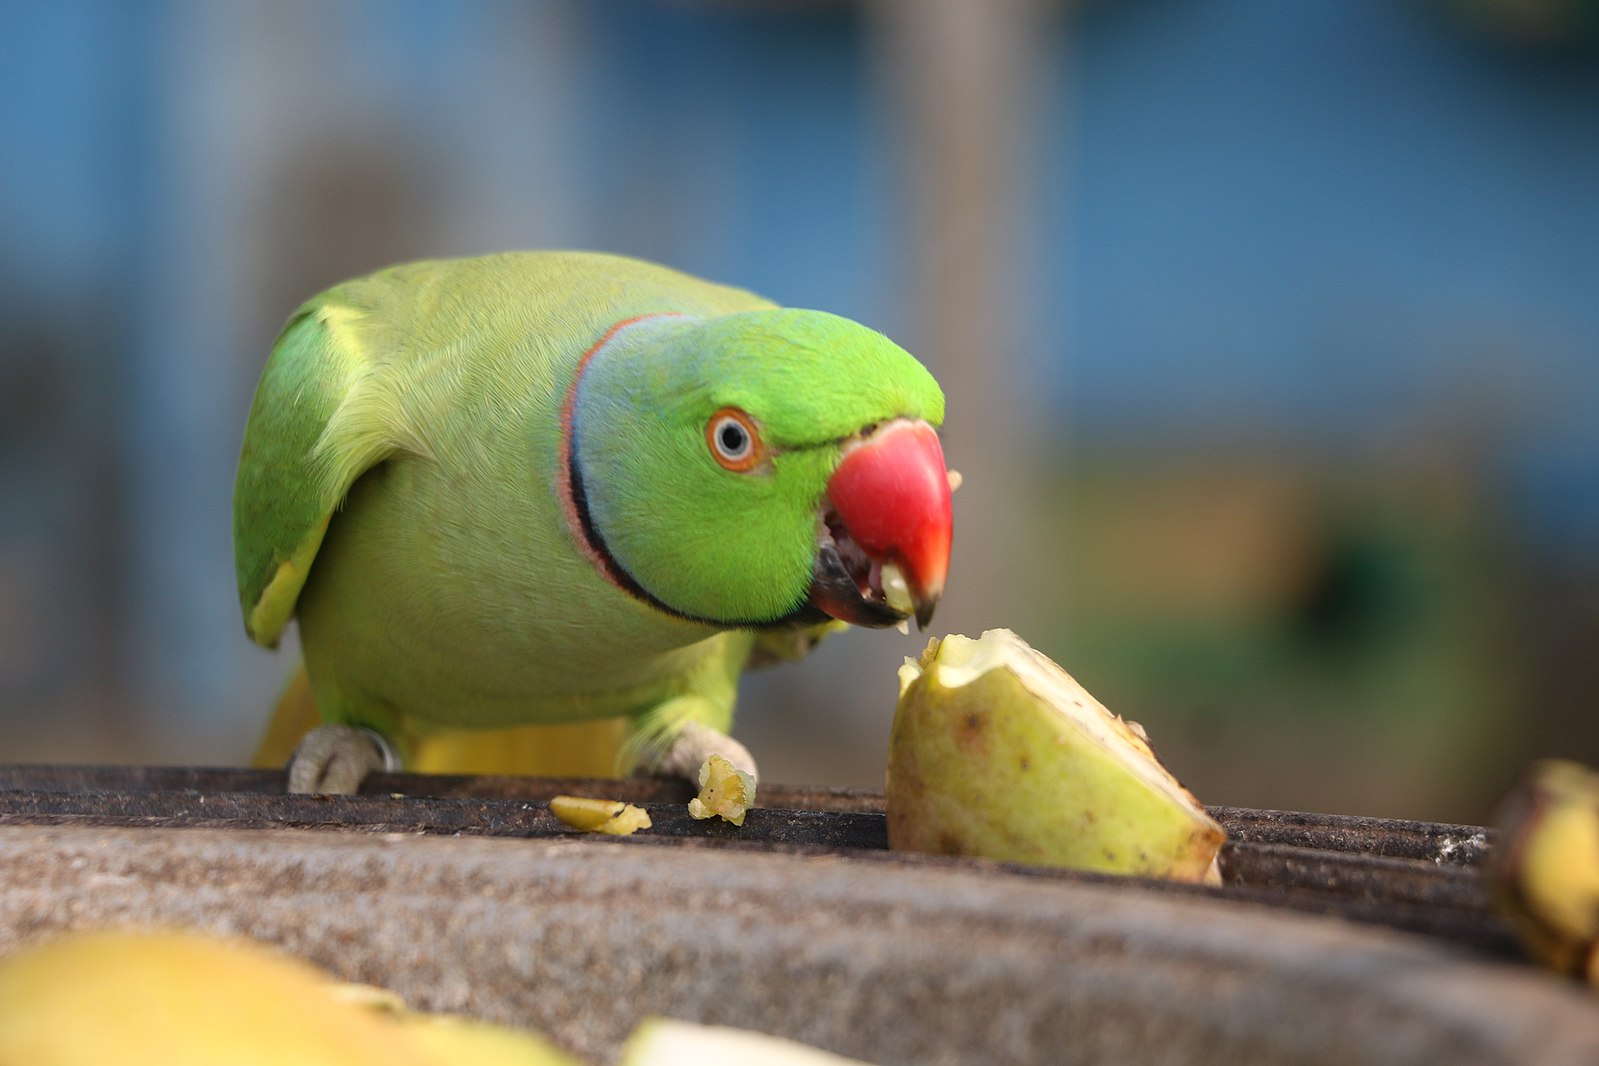 a bird eating an apple slice